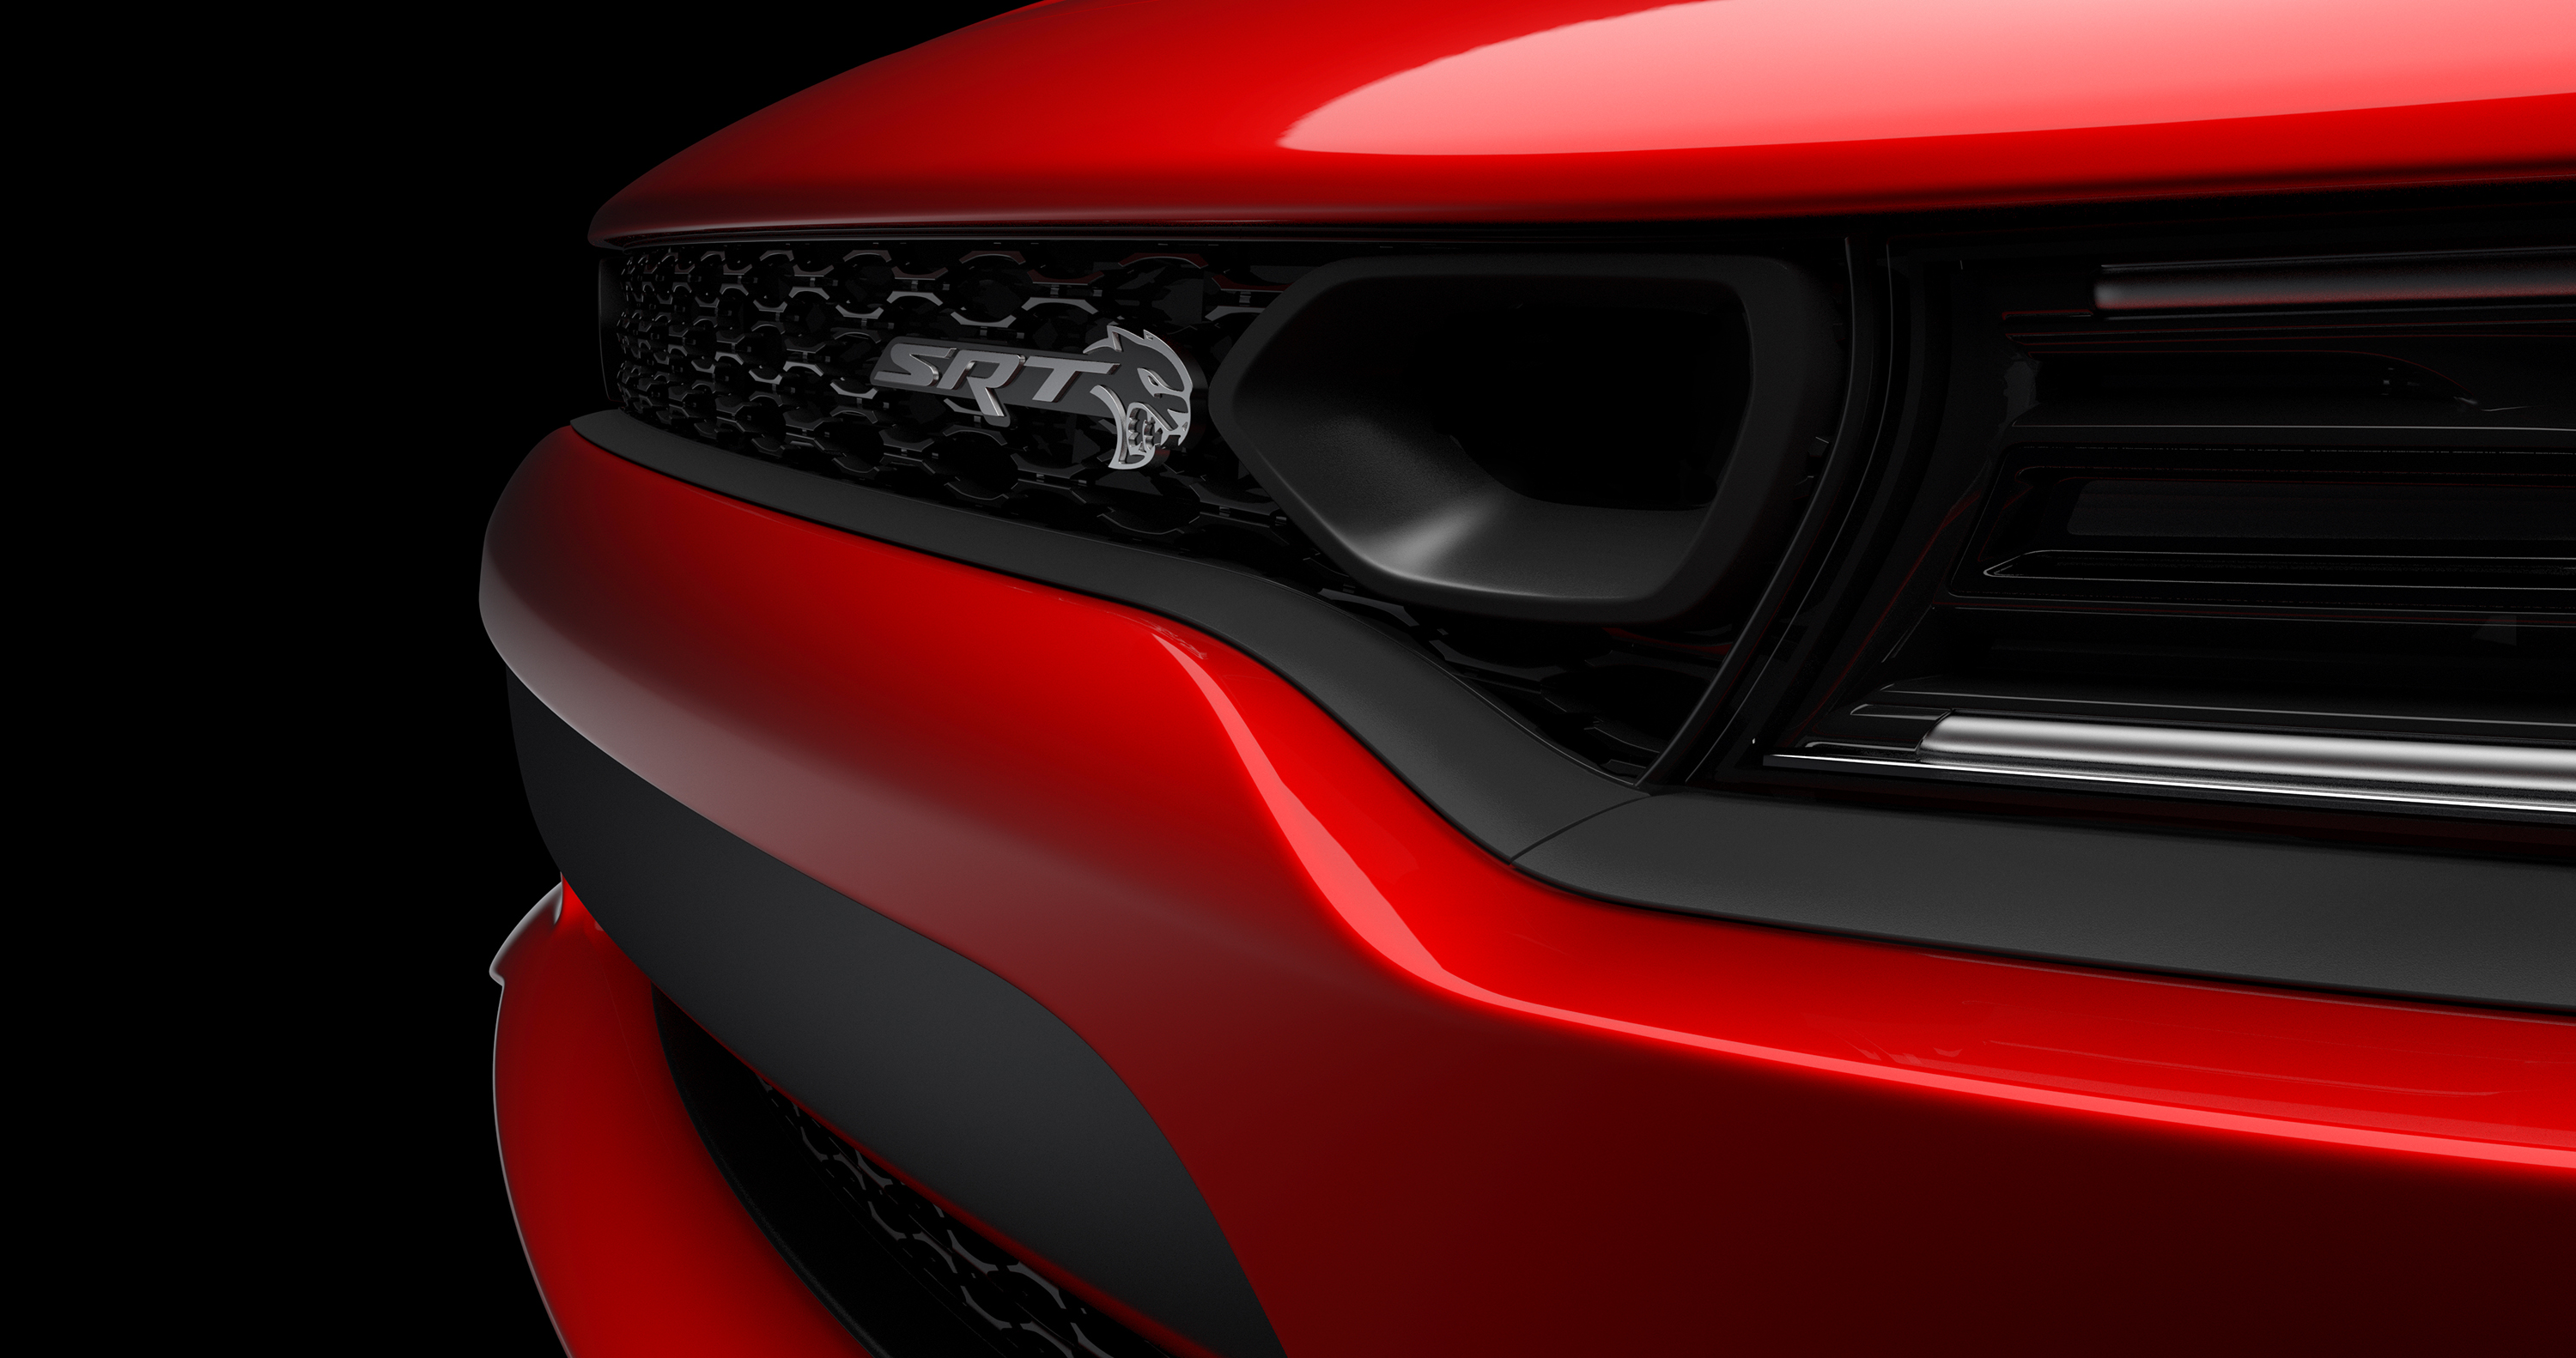 2019 Dodge Charger Hellcat Teaser